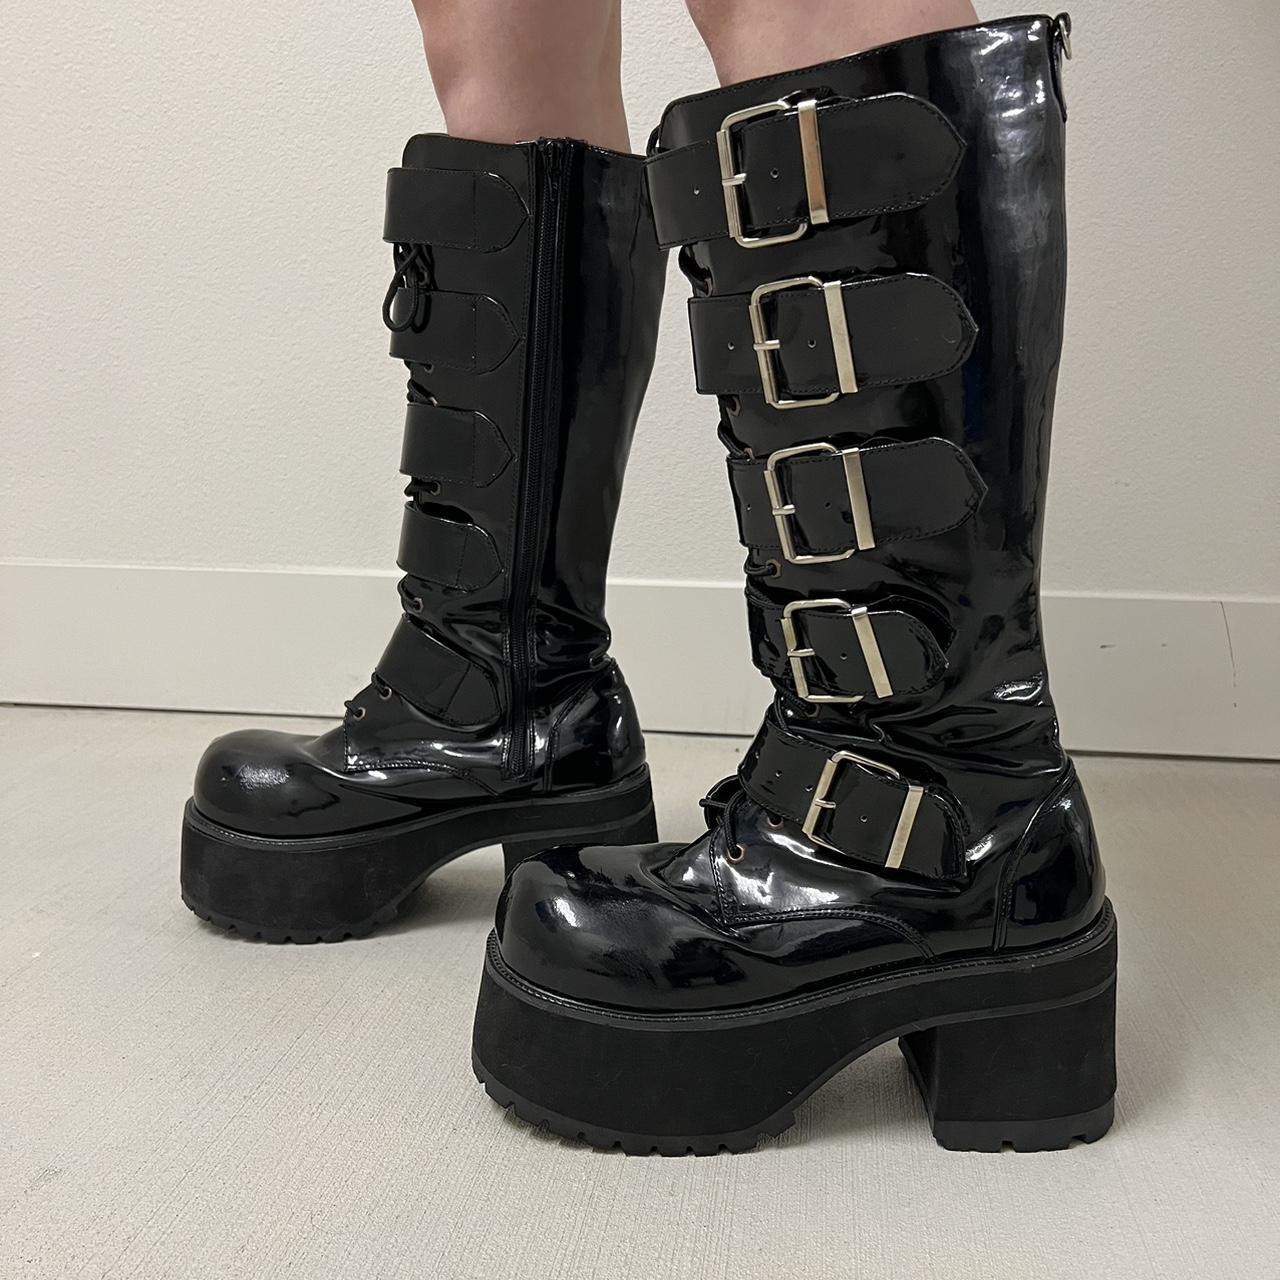 Demonia Black Platform Boots ♡ Size 10 ♡ There is... - Depop